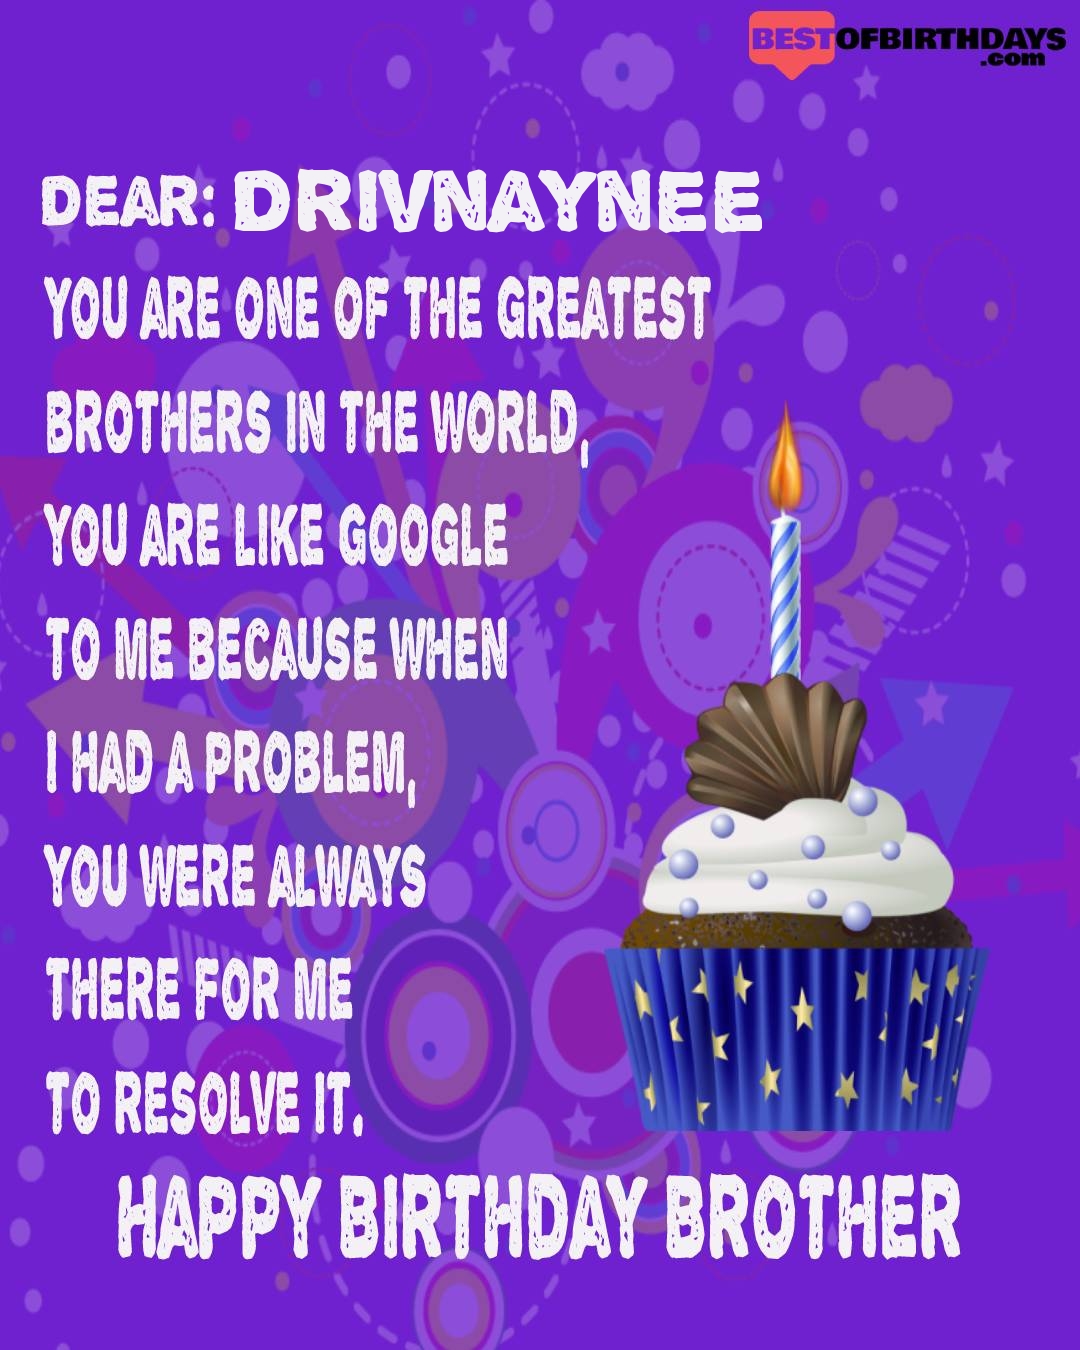 Happy birthday drivnaynee bhai brother bro